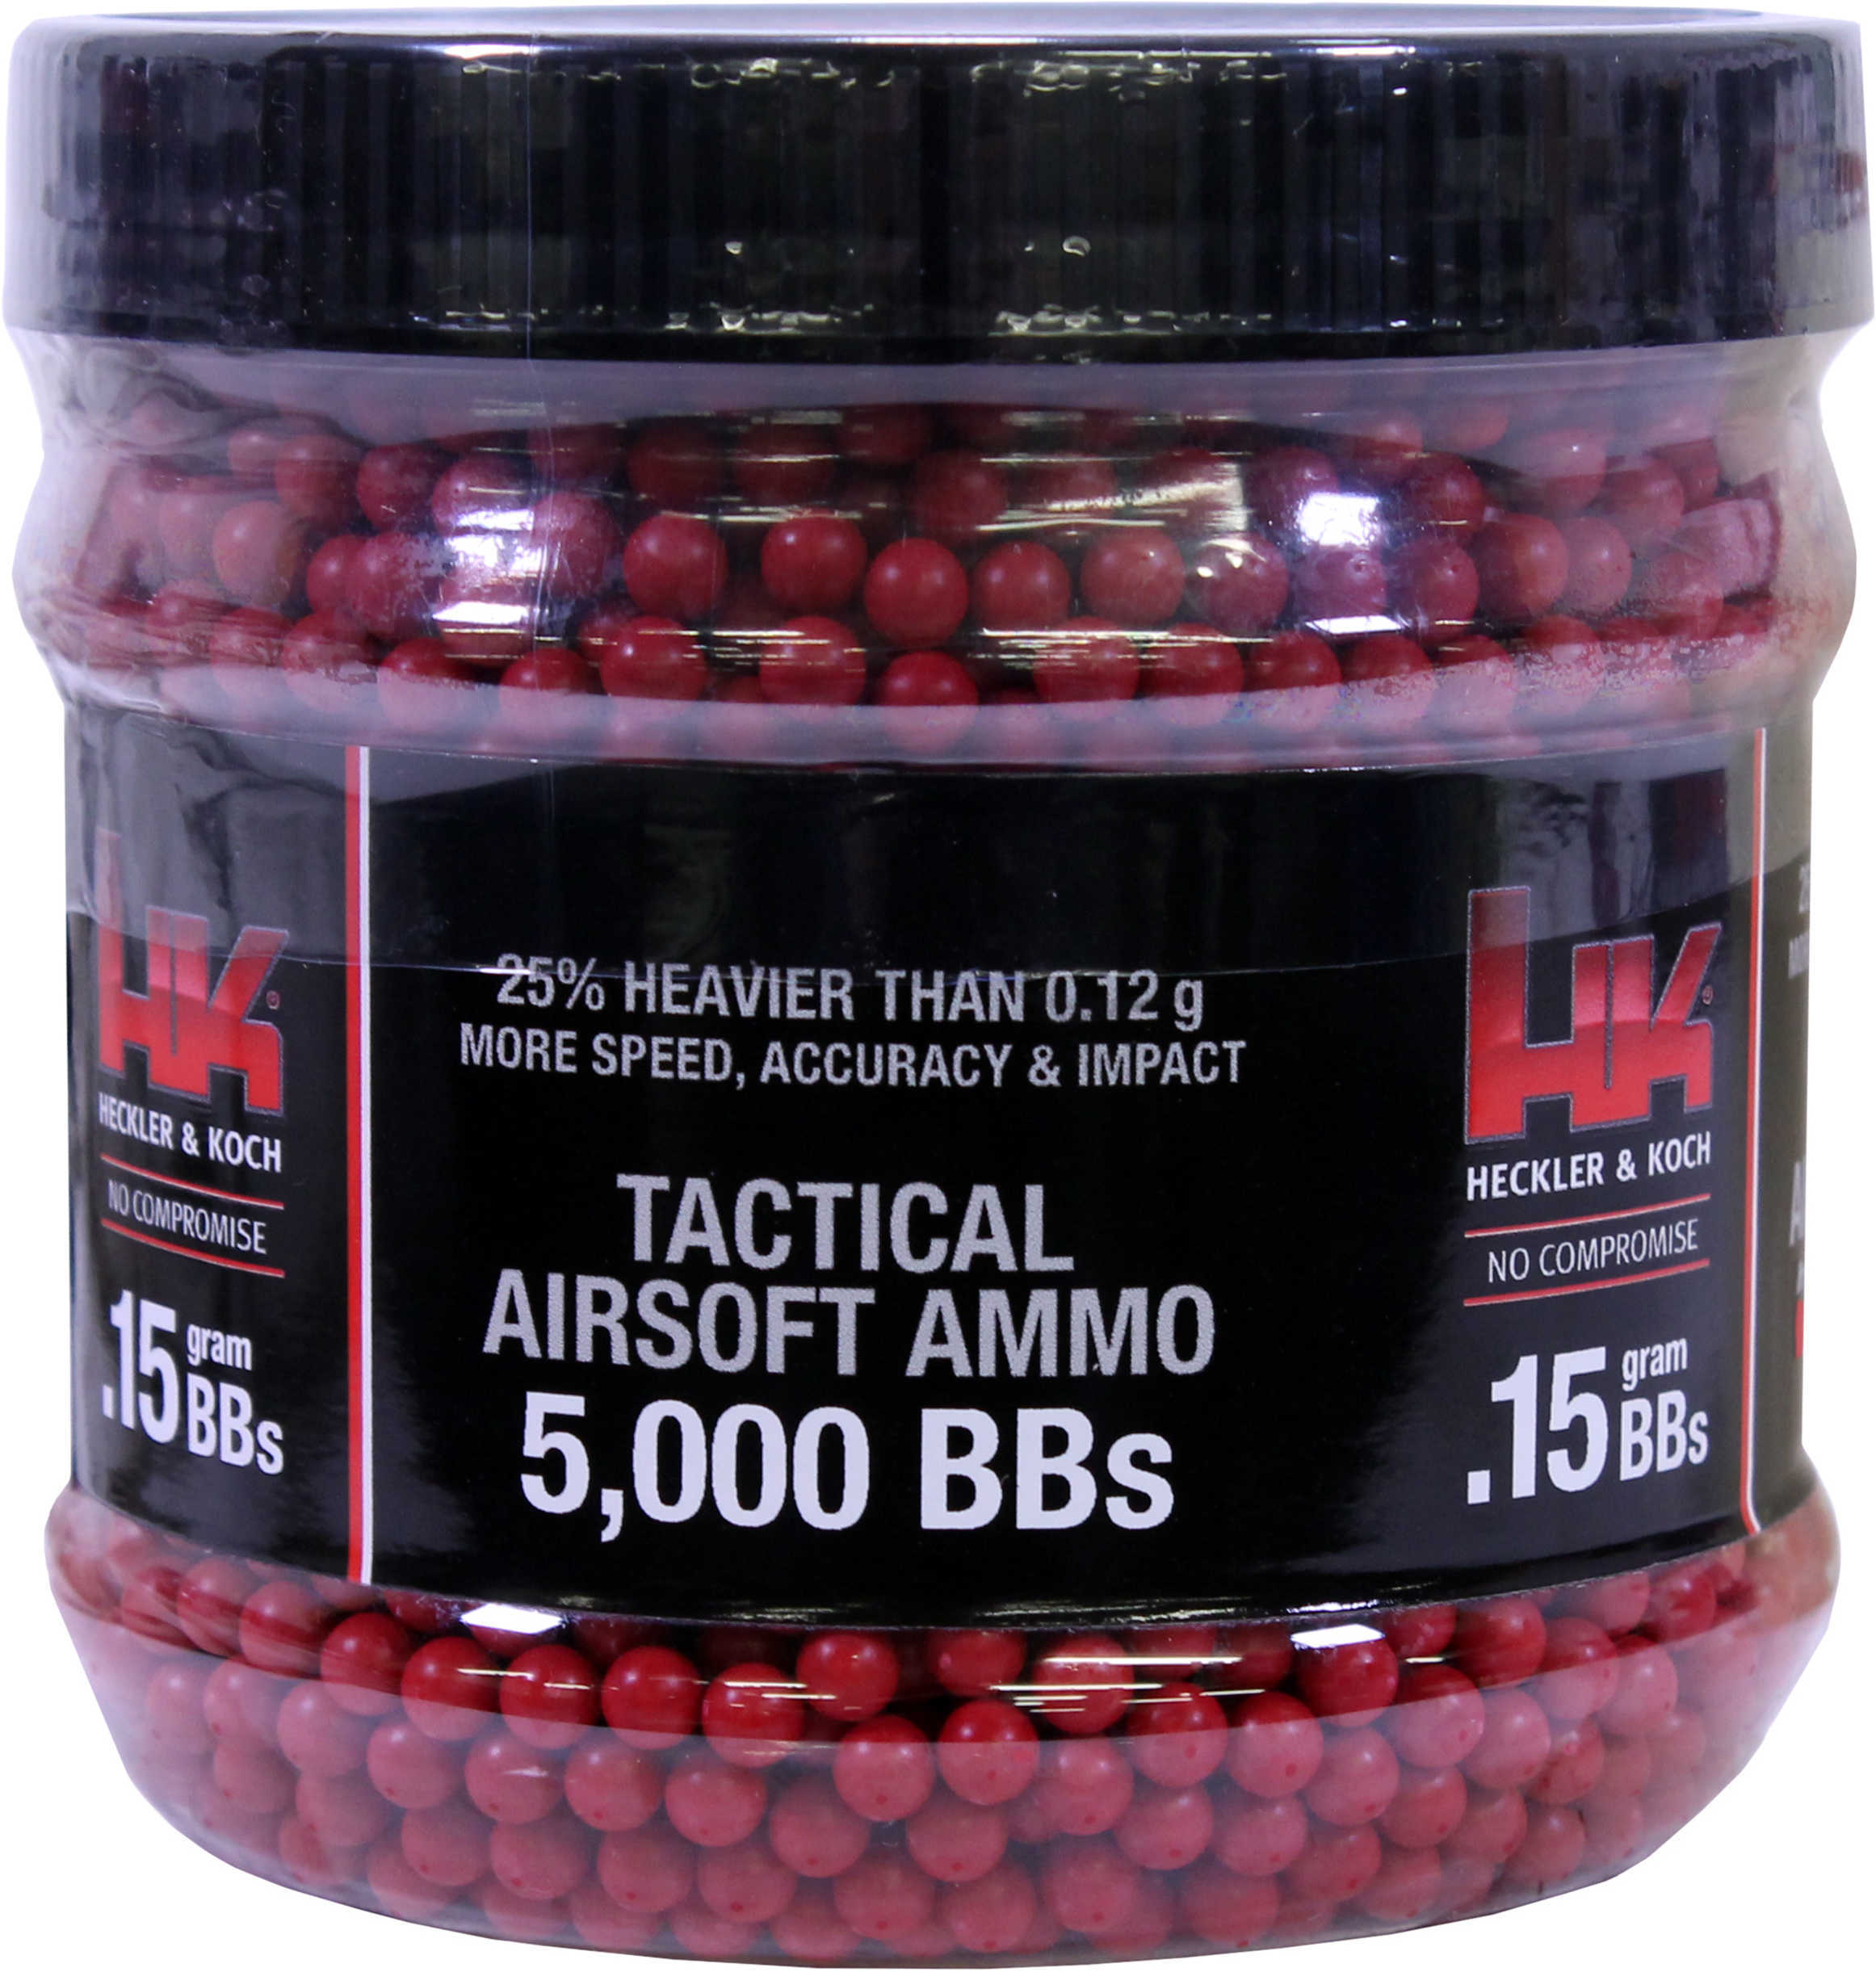 Umarex USA HK Red 6mm, .15 Grain, Per 5000 Md: 2230113